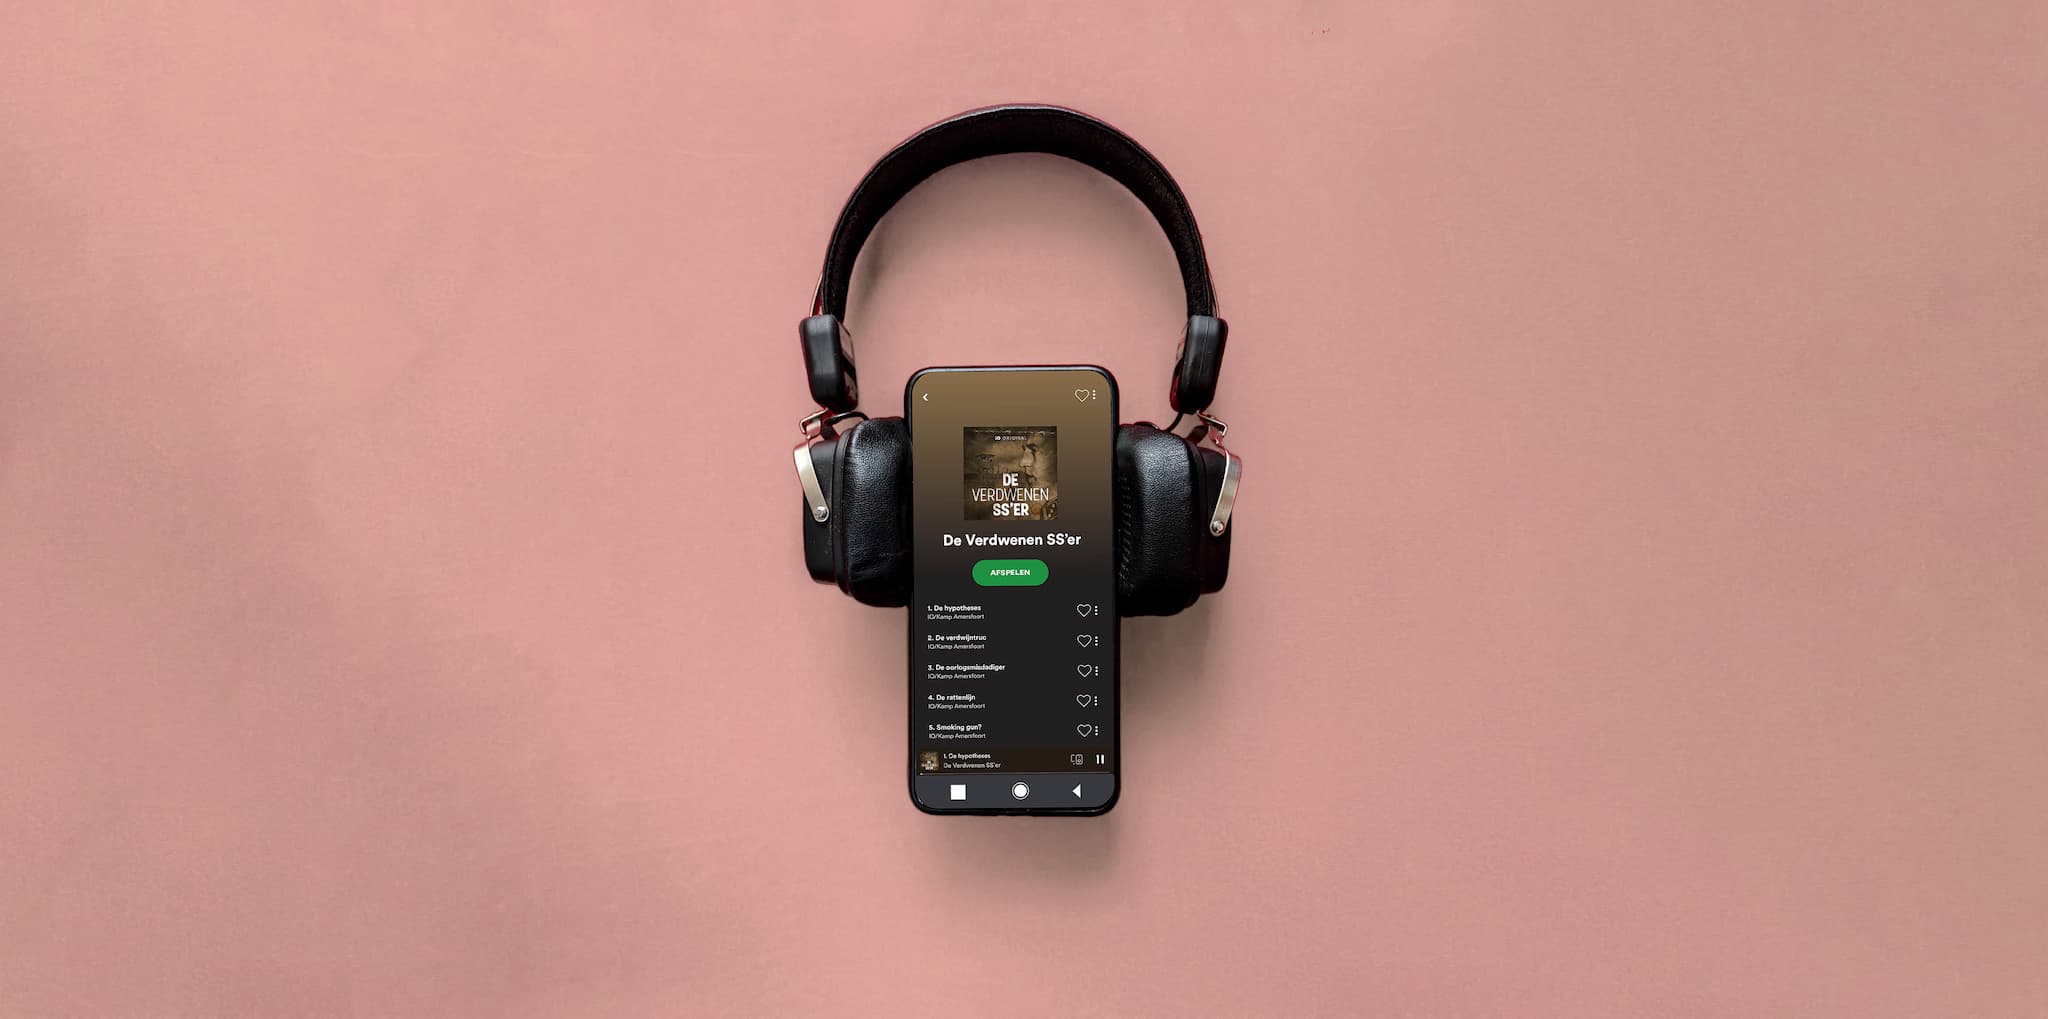 Podcast spotify headphone image